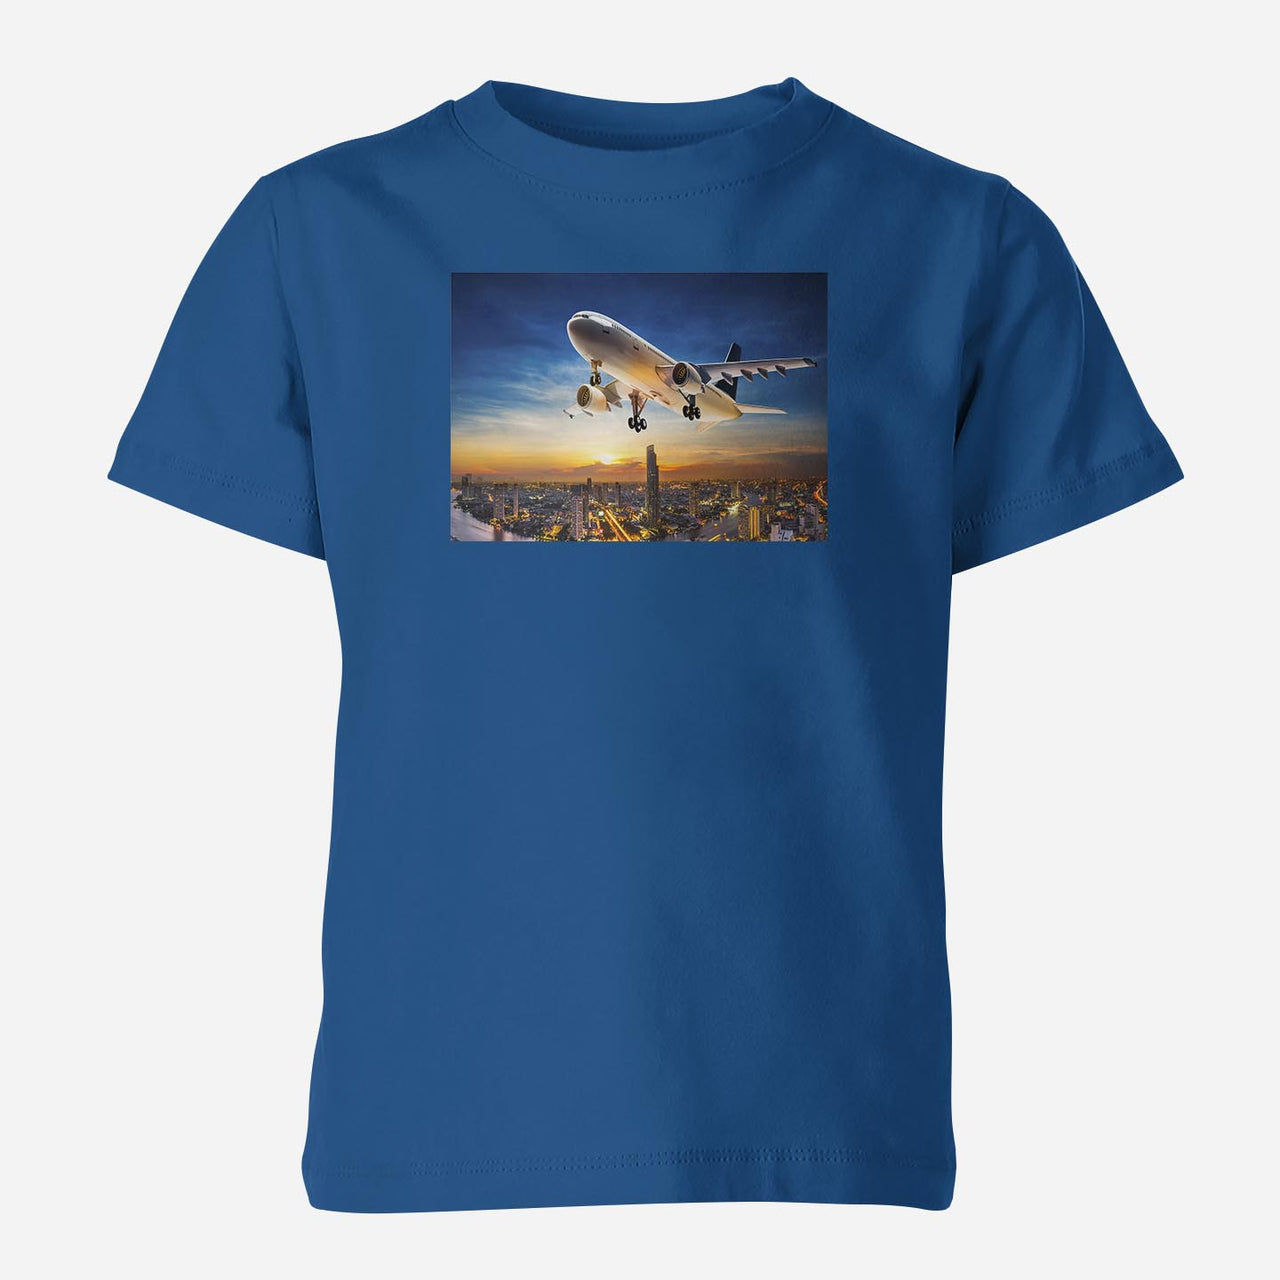 Super Aircraft over City at Sunset Designed Children T-Shirts